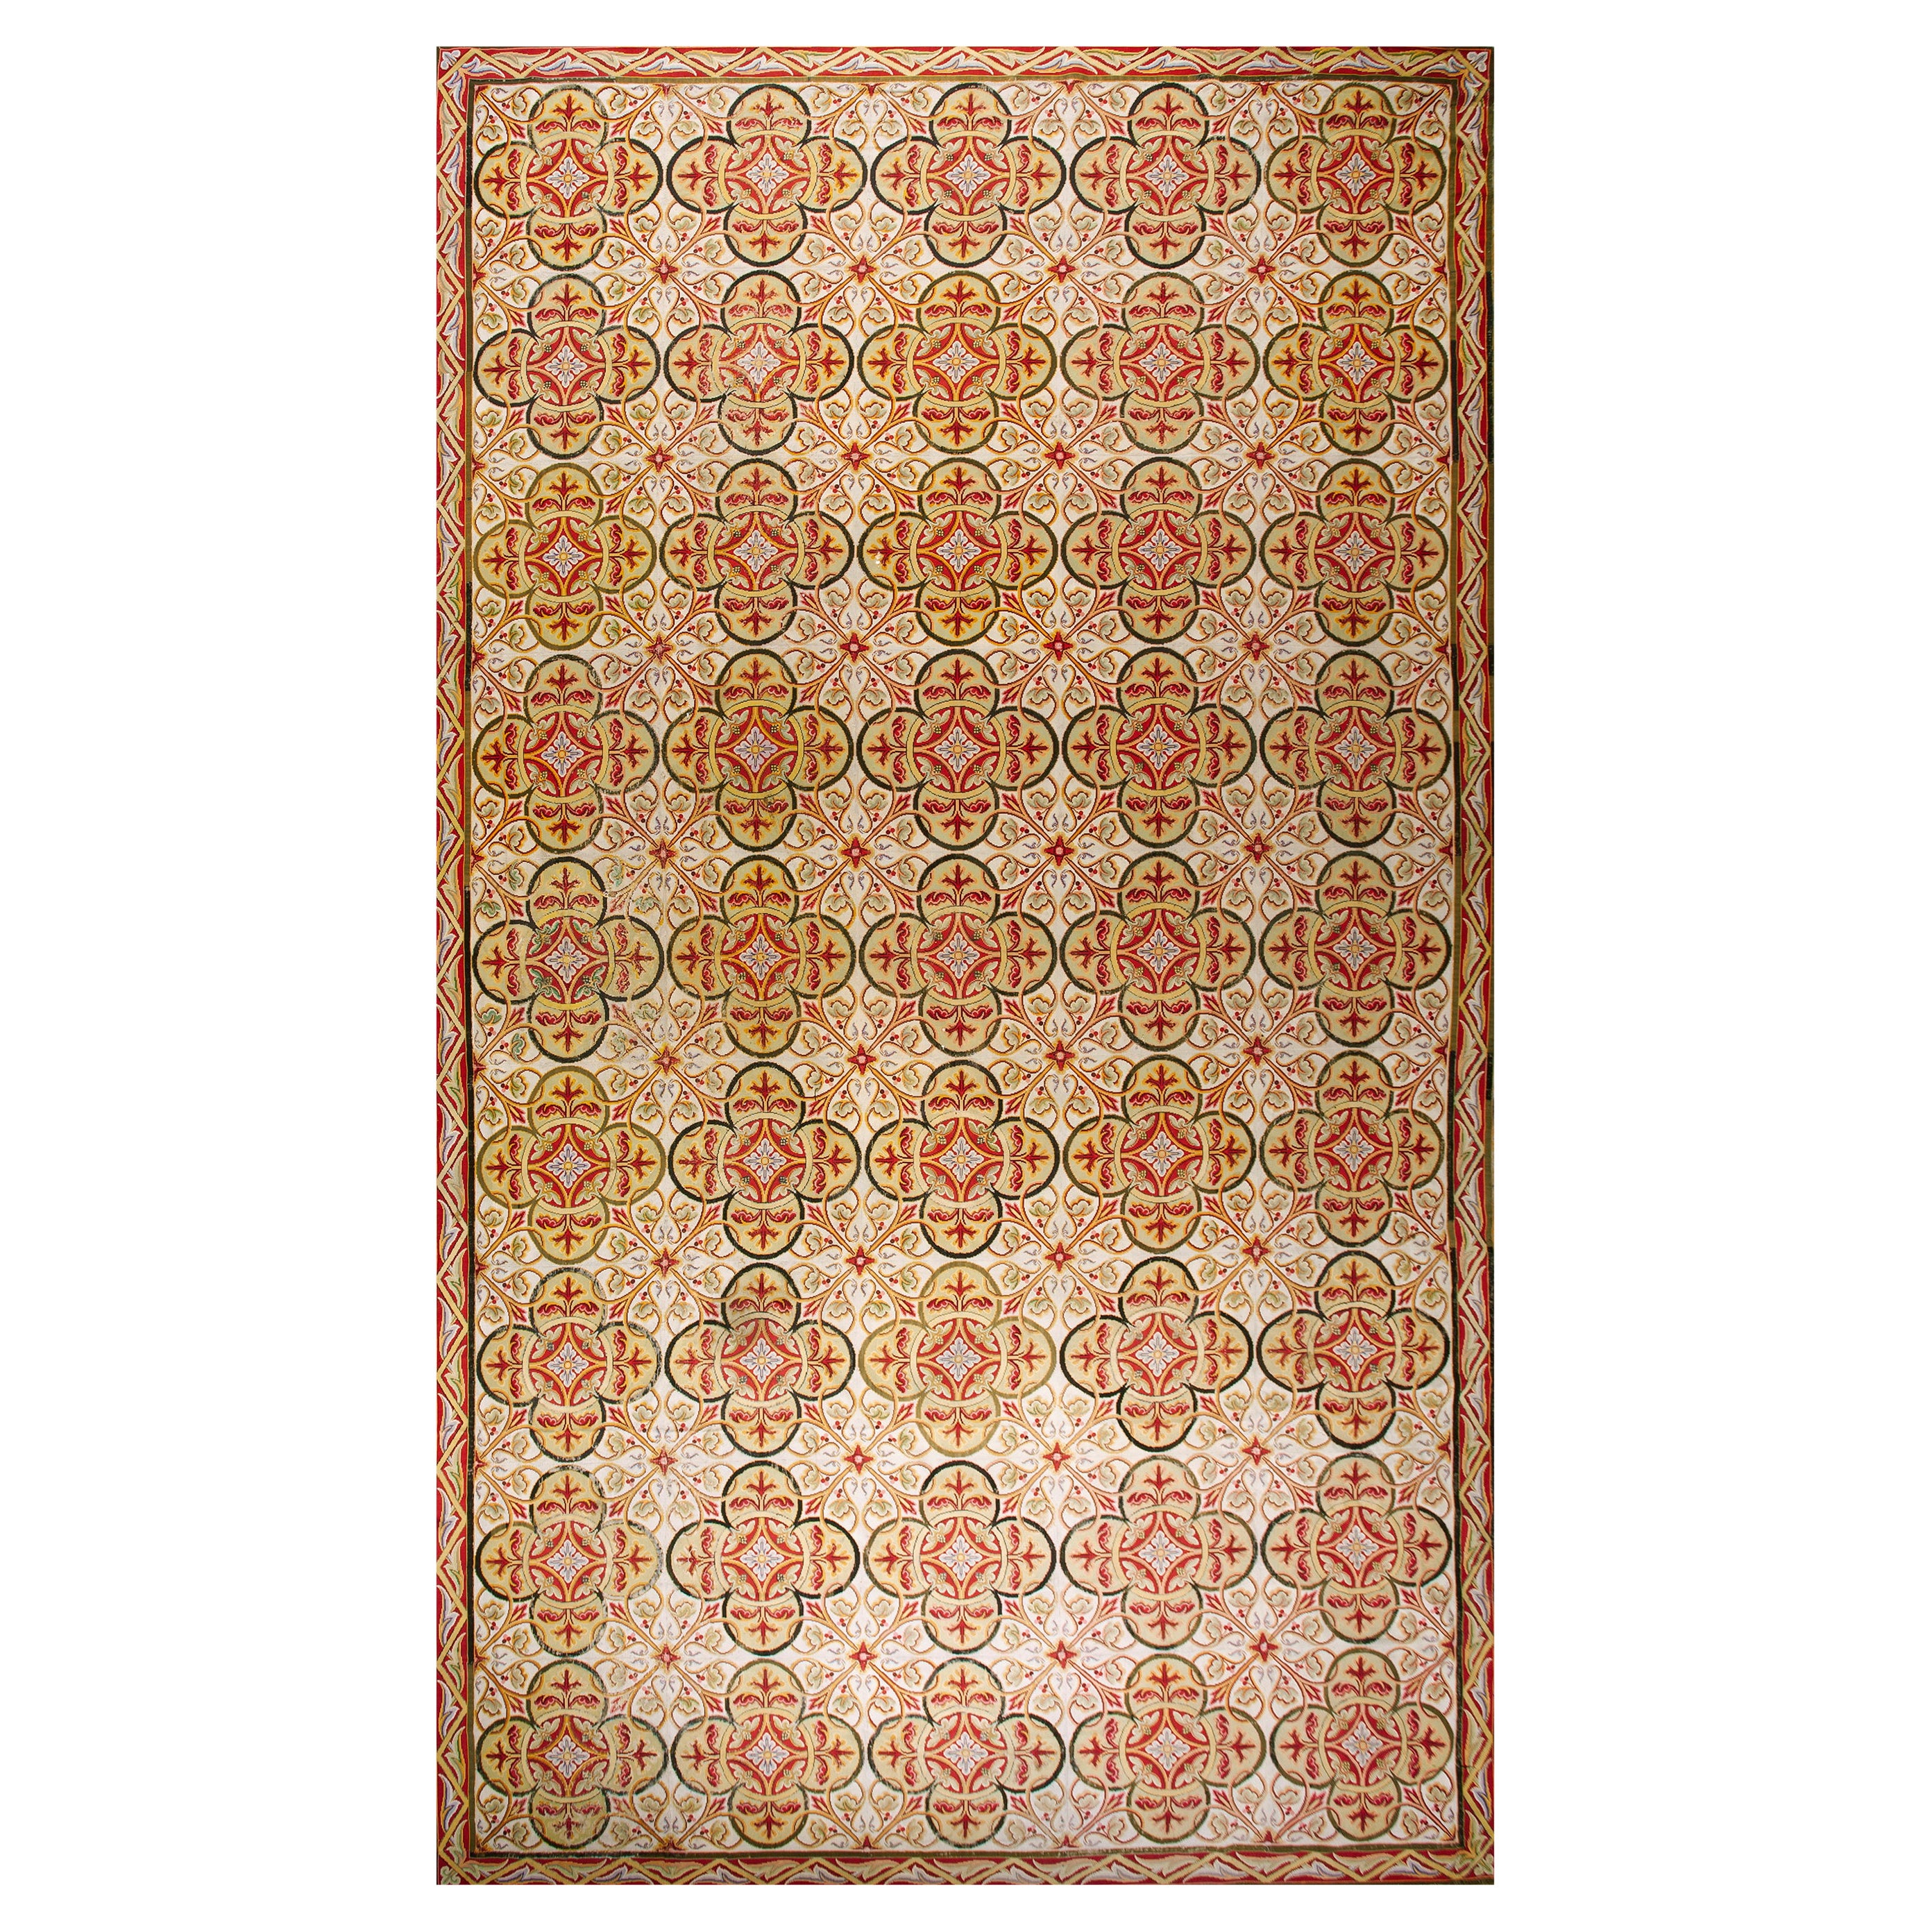 Mid 19th Century English Needlepoint Carpet ( 11' x 19'6" - 335 x 594 )